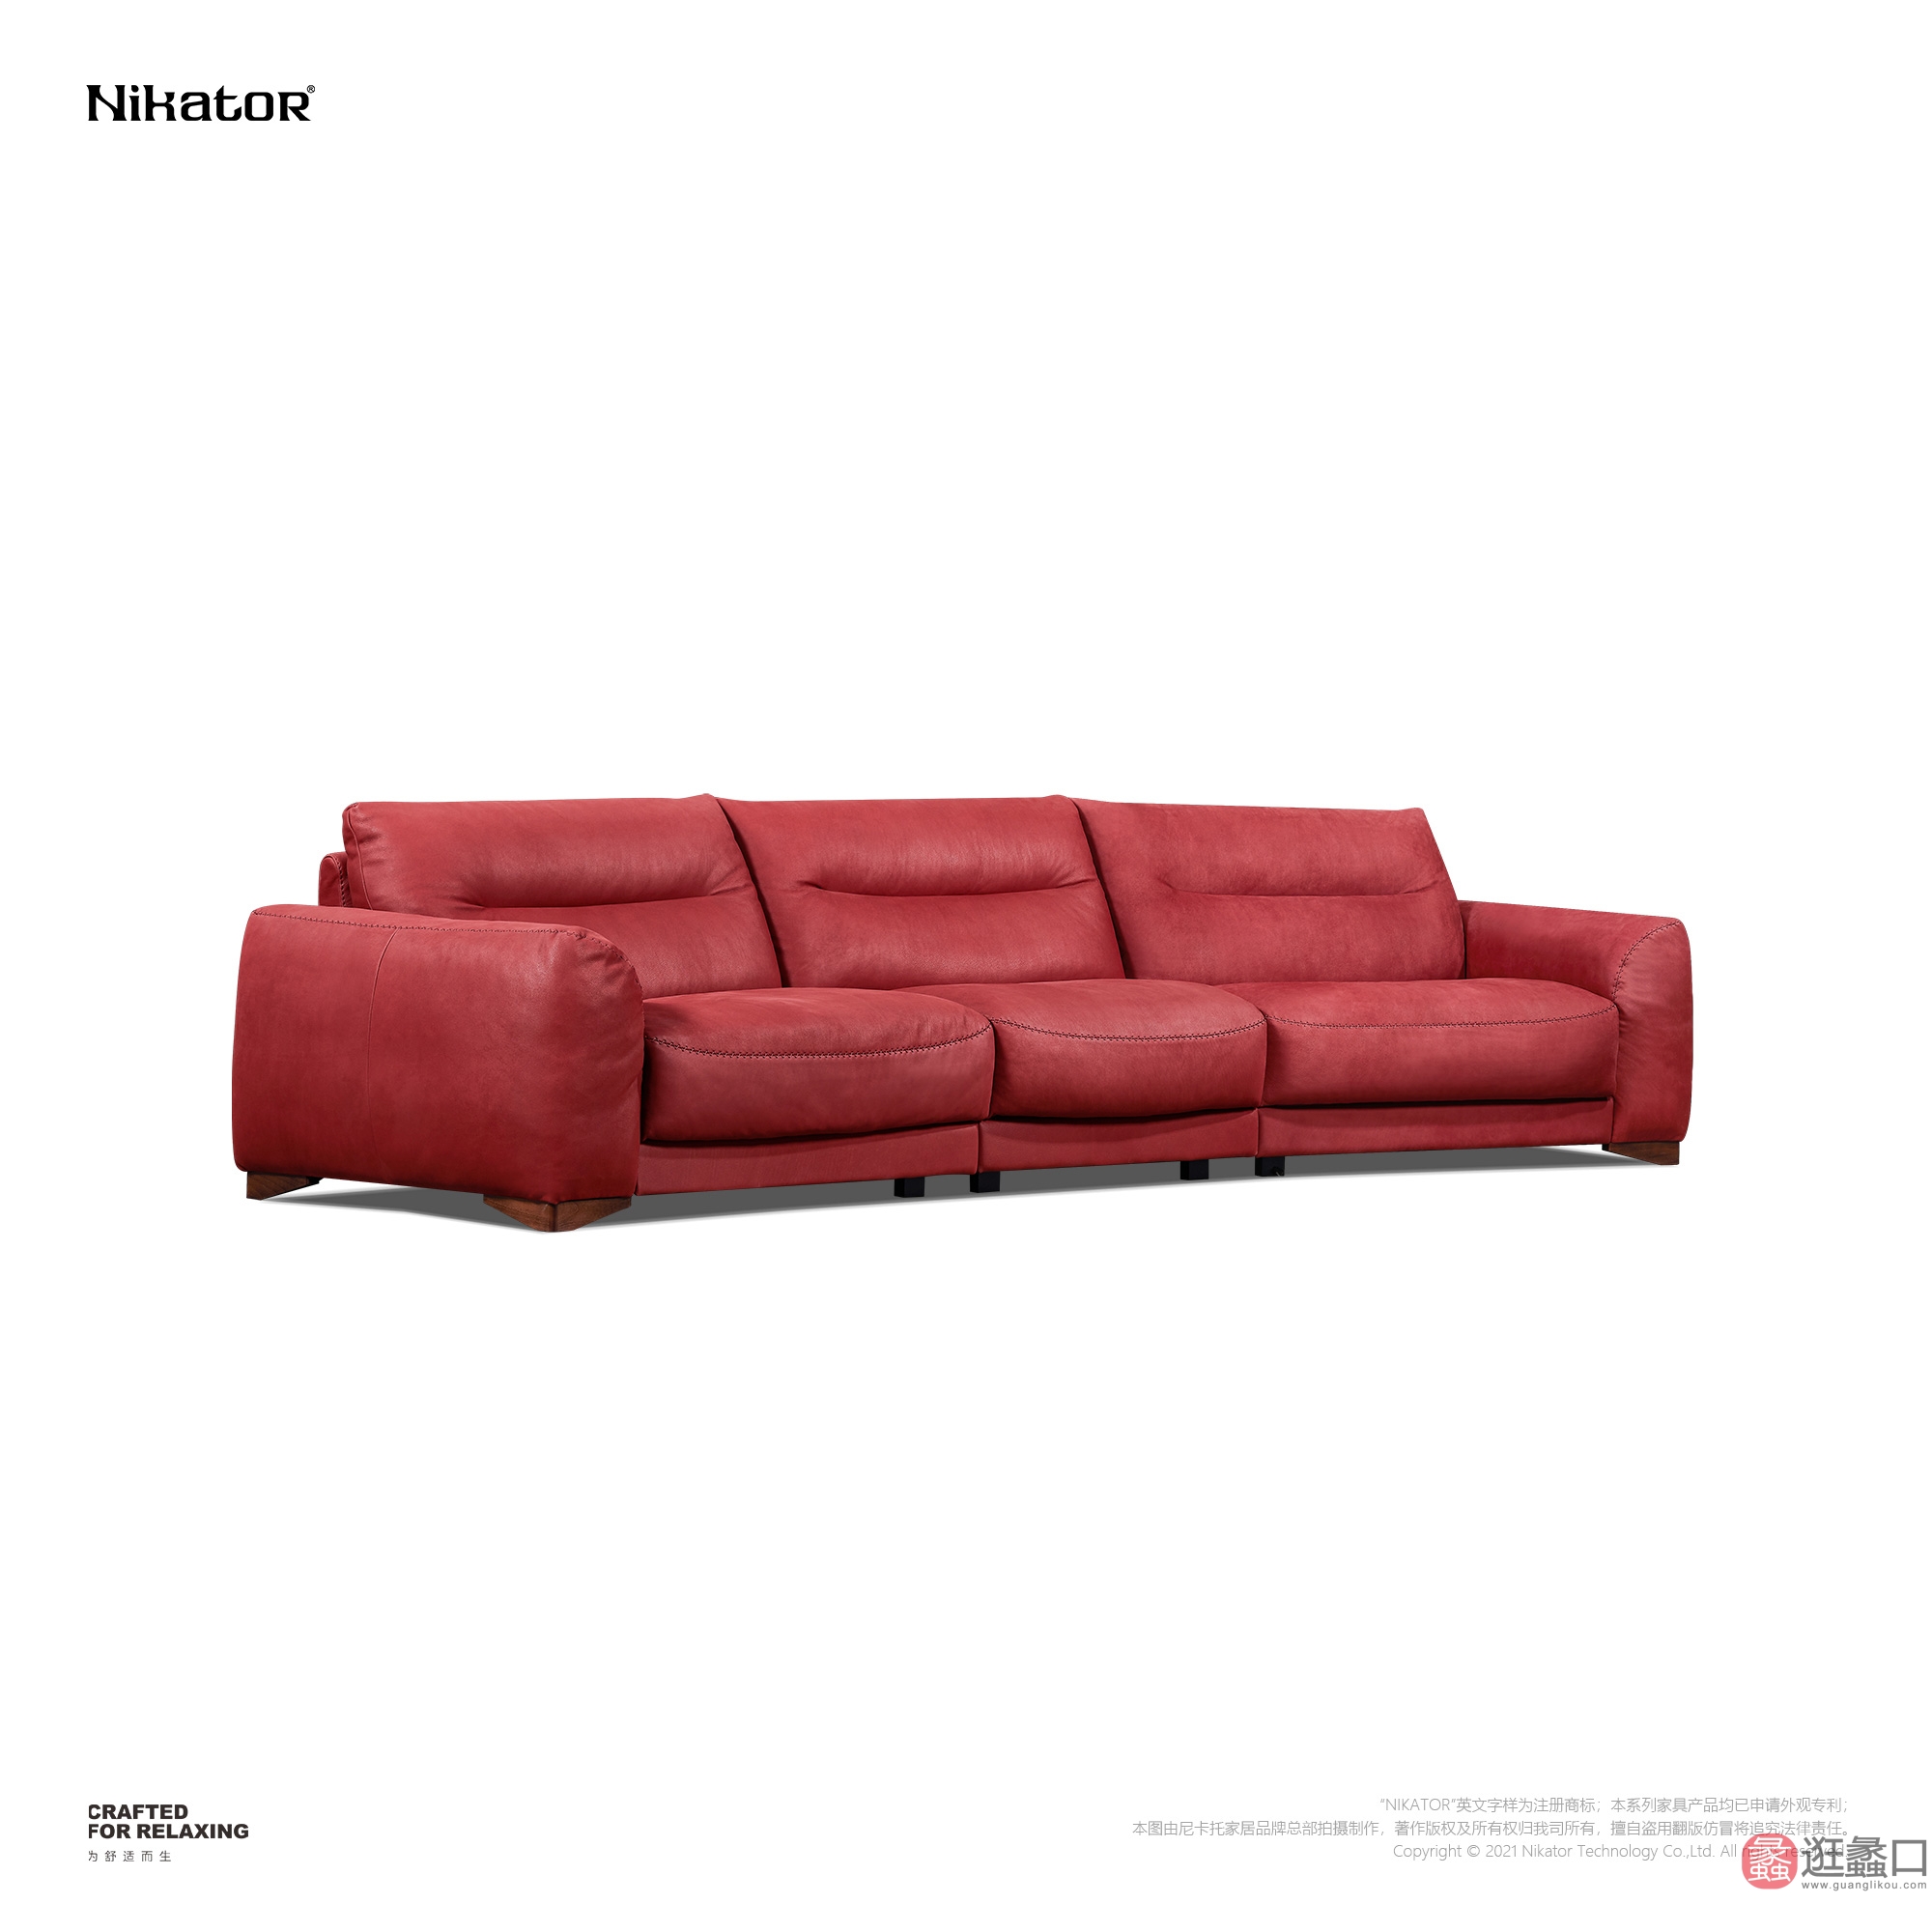 NIKATOR｜尼卡托家具客厅现代简约直排三人位沙发红色真皮超低沙发大小户型NIKATOR003